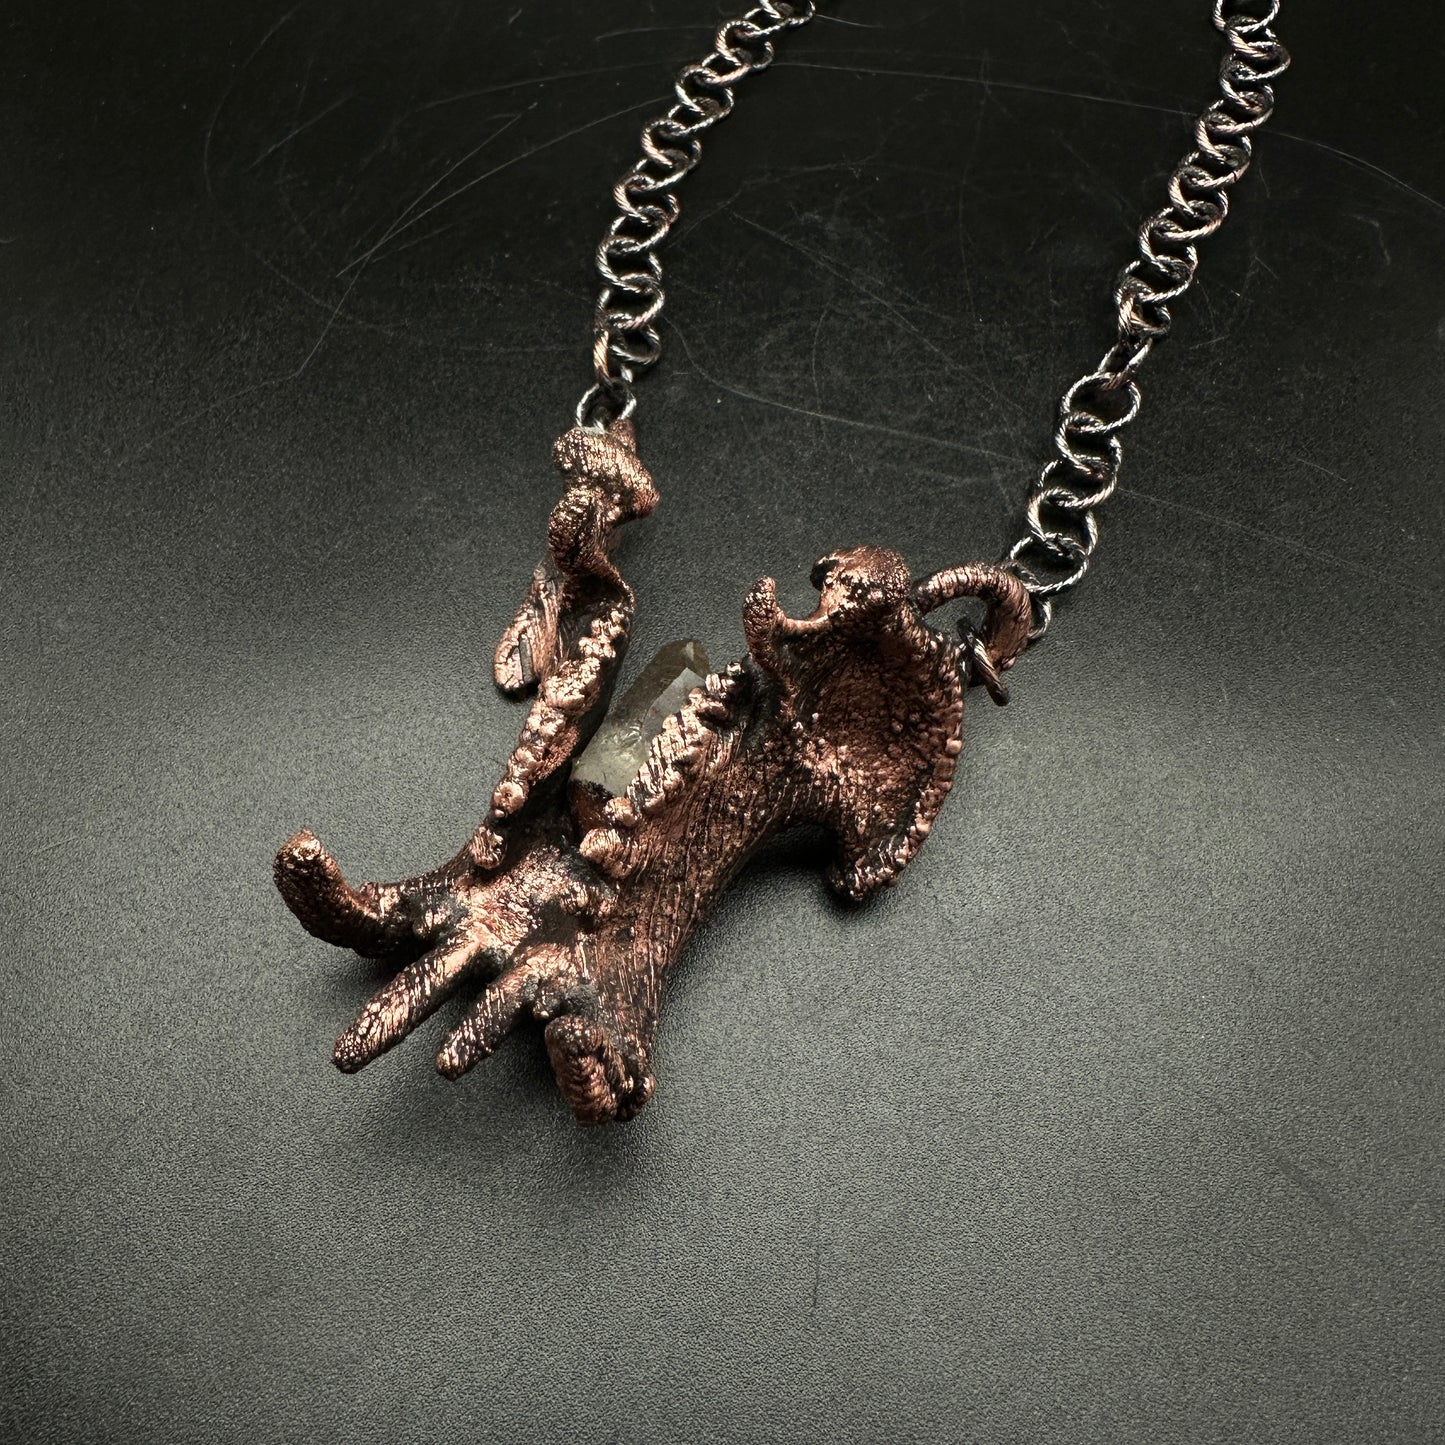 Artiodactyl ~ Hippo Jawbone Necklace